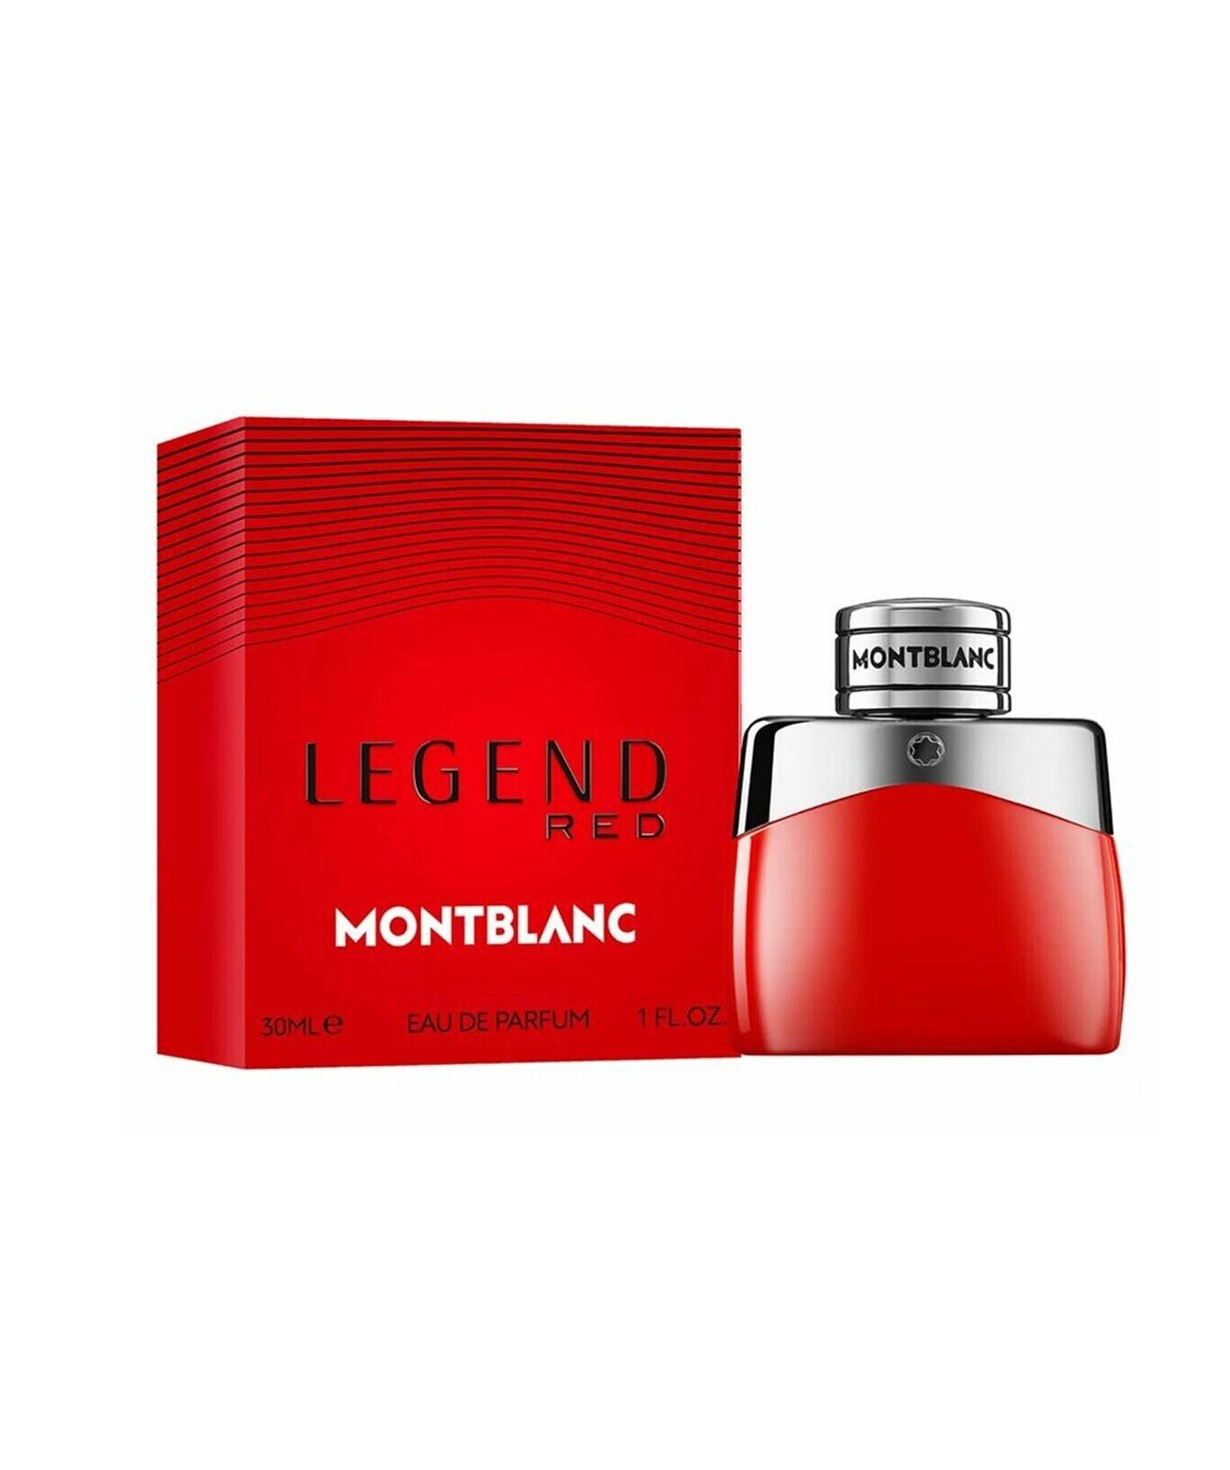 Perfume «Montblanc» Legend Red, for men, 30 ml